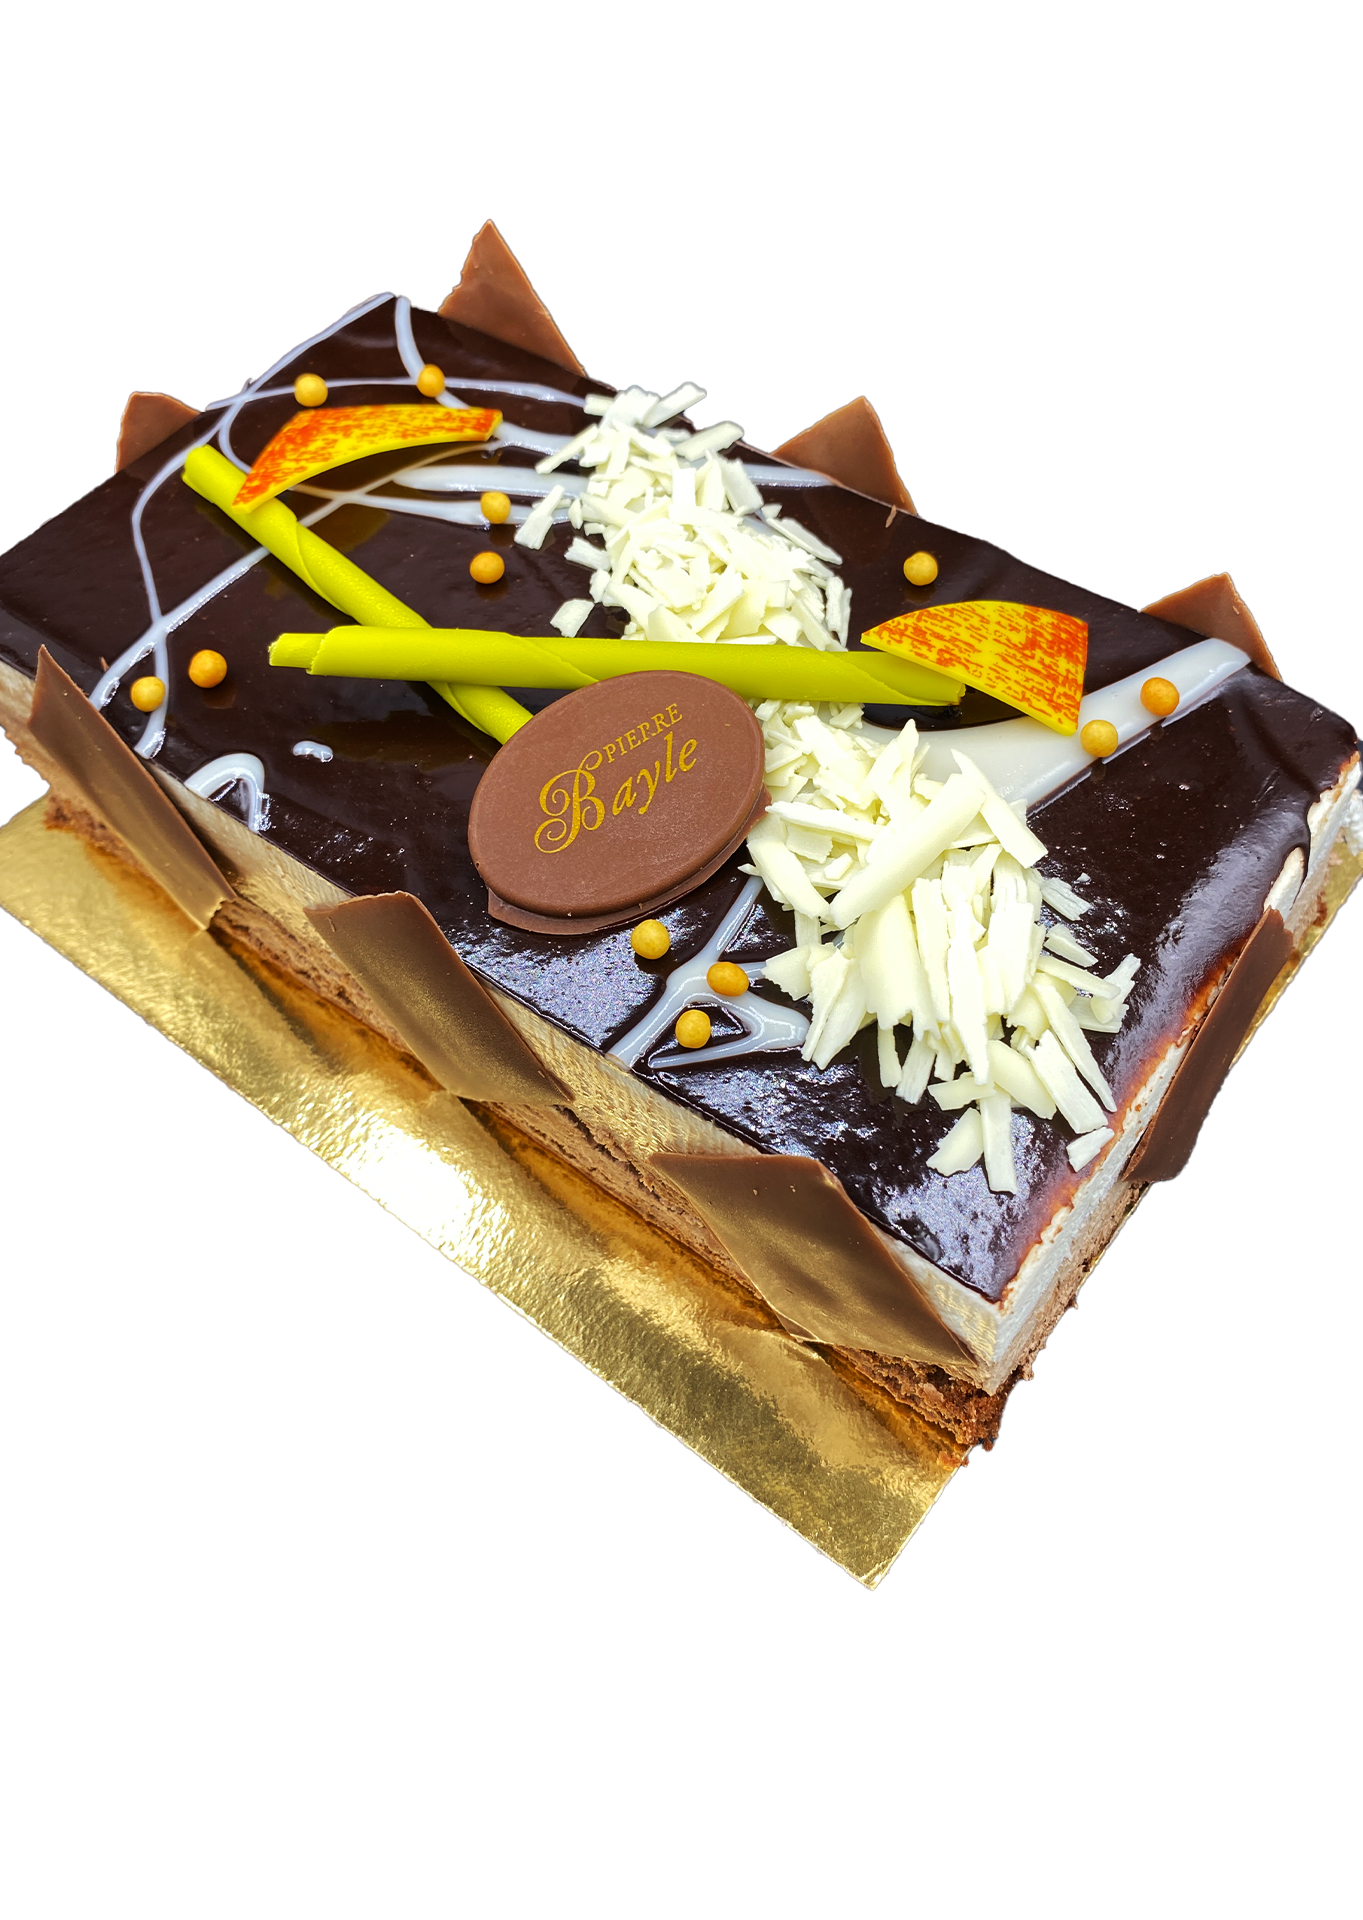 Gâteau Le 3 chocolats - Pierre Bayle Artisan